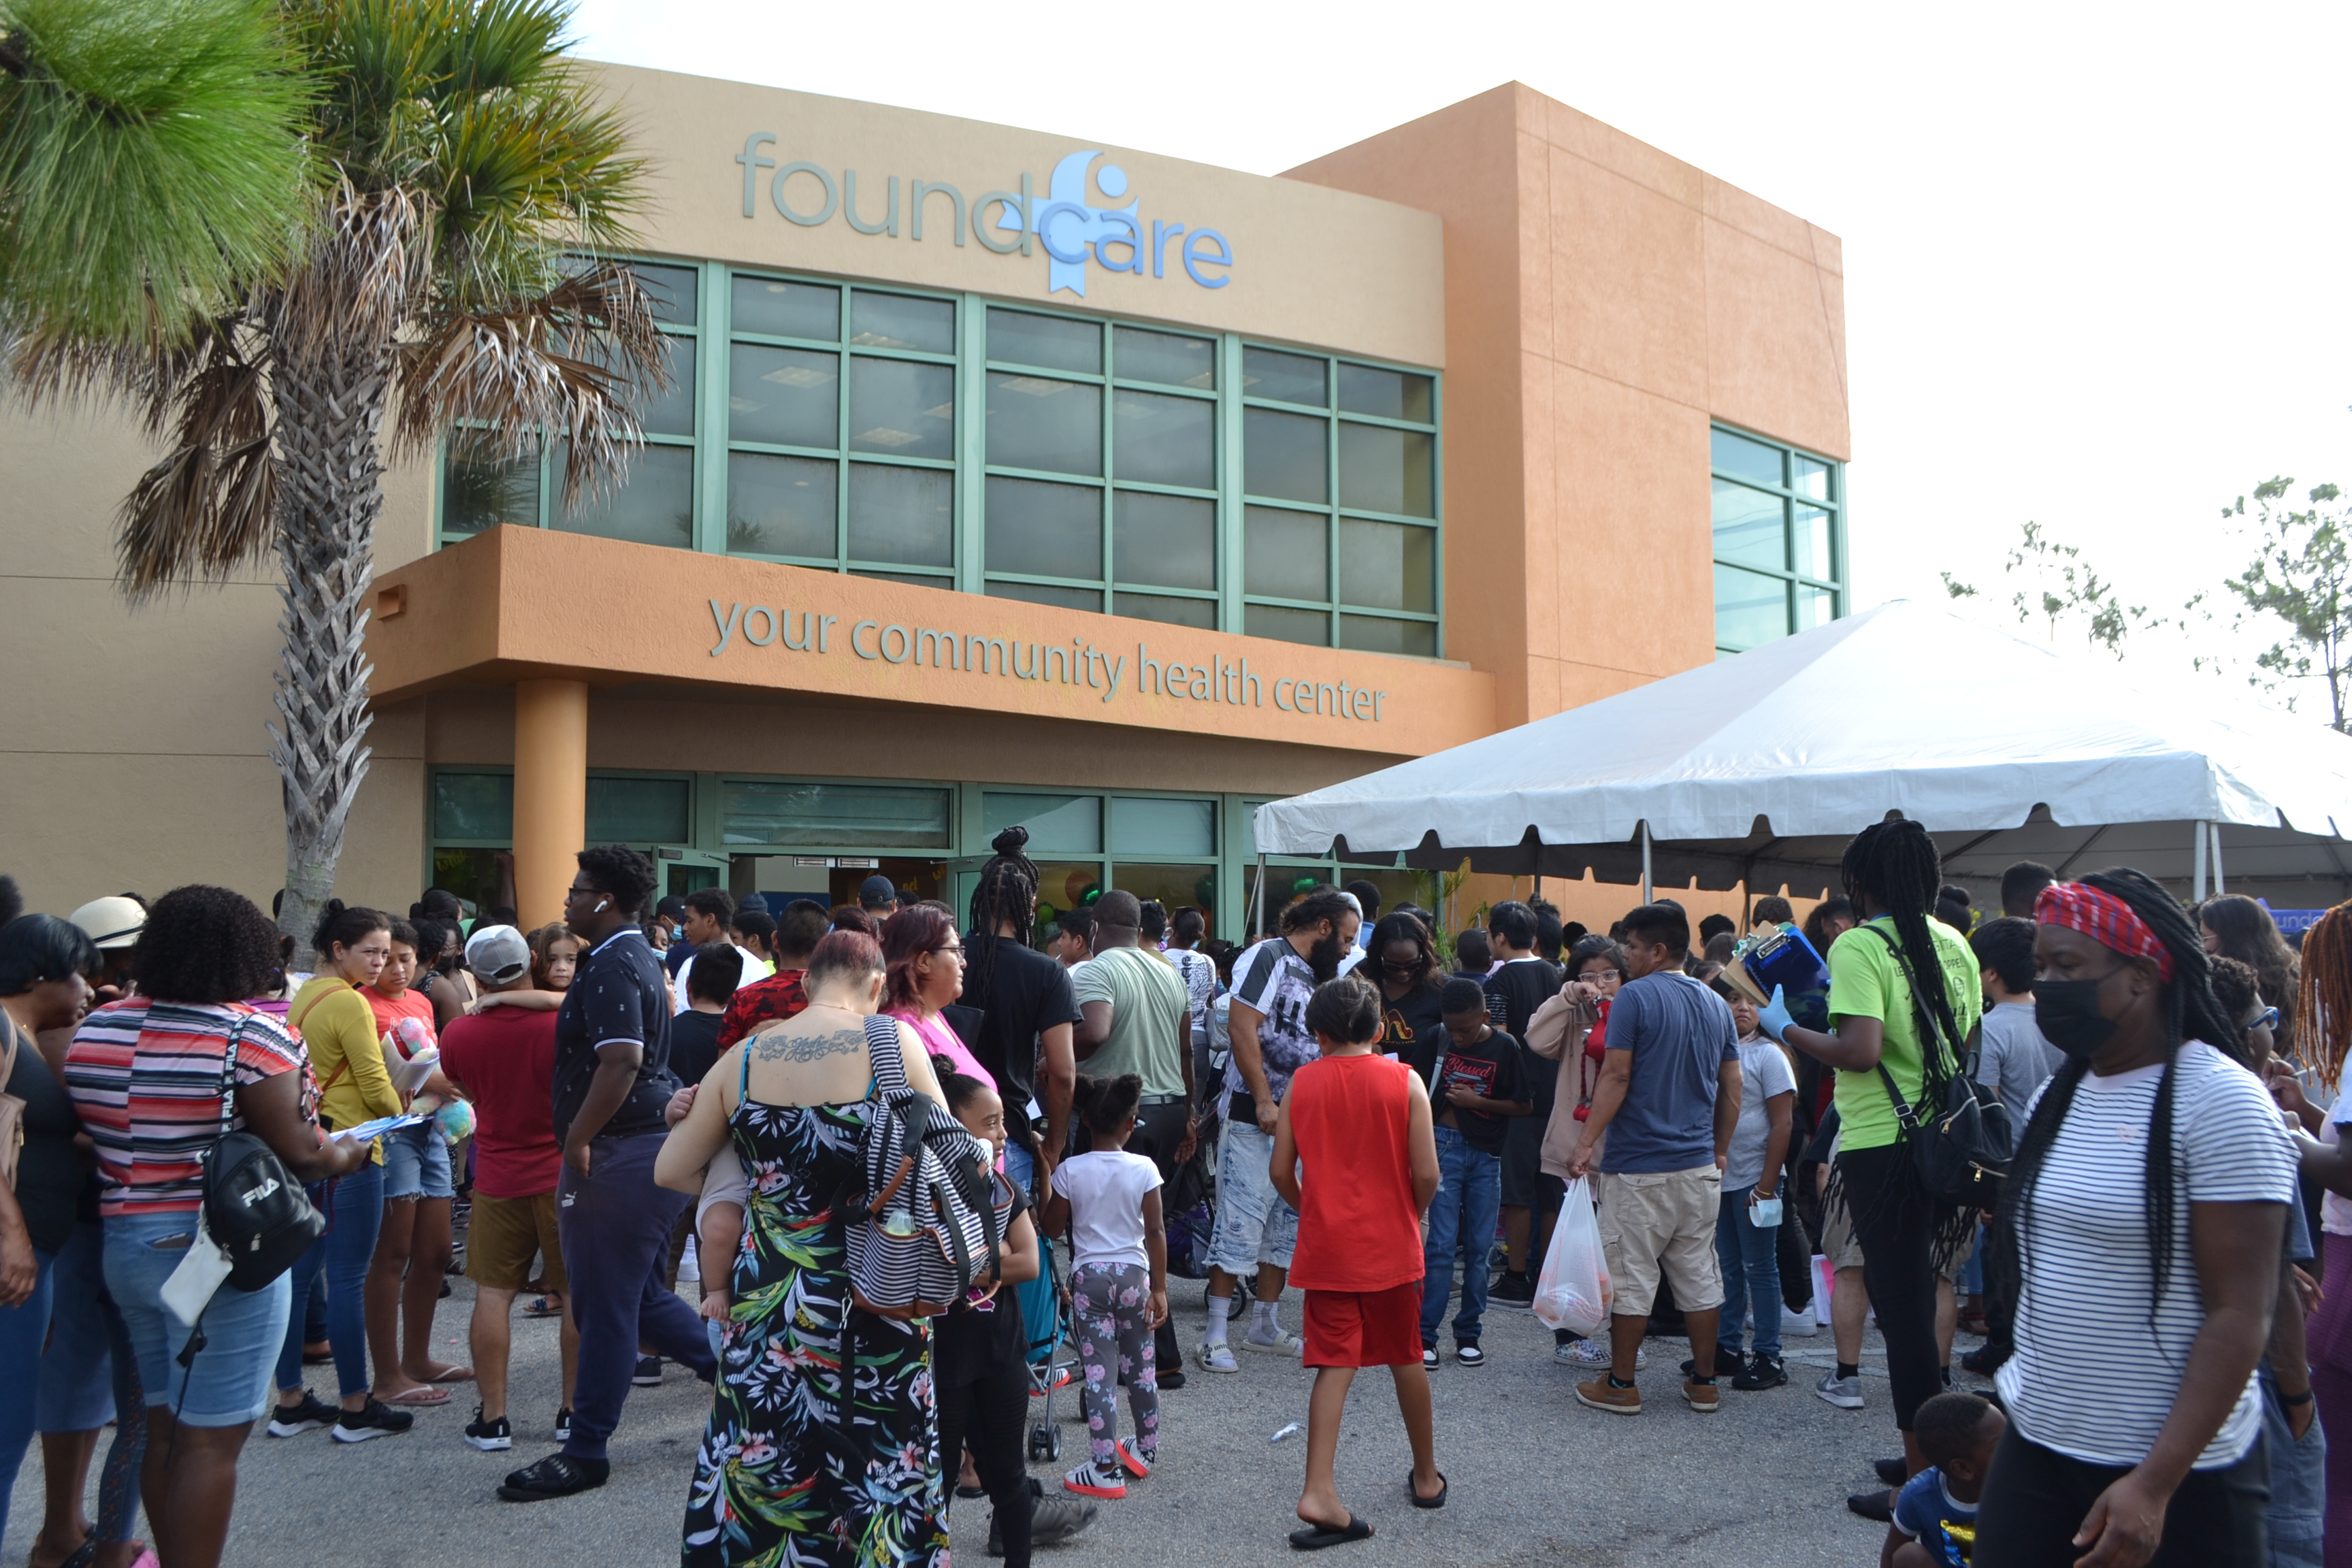 WPTV & WPBF Spotlight Back-to-School Health Fair at FoundCare